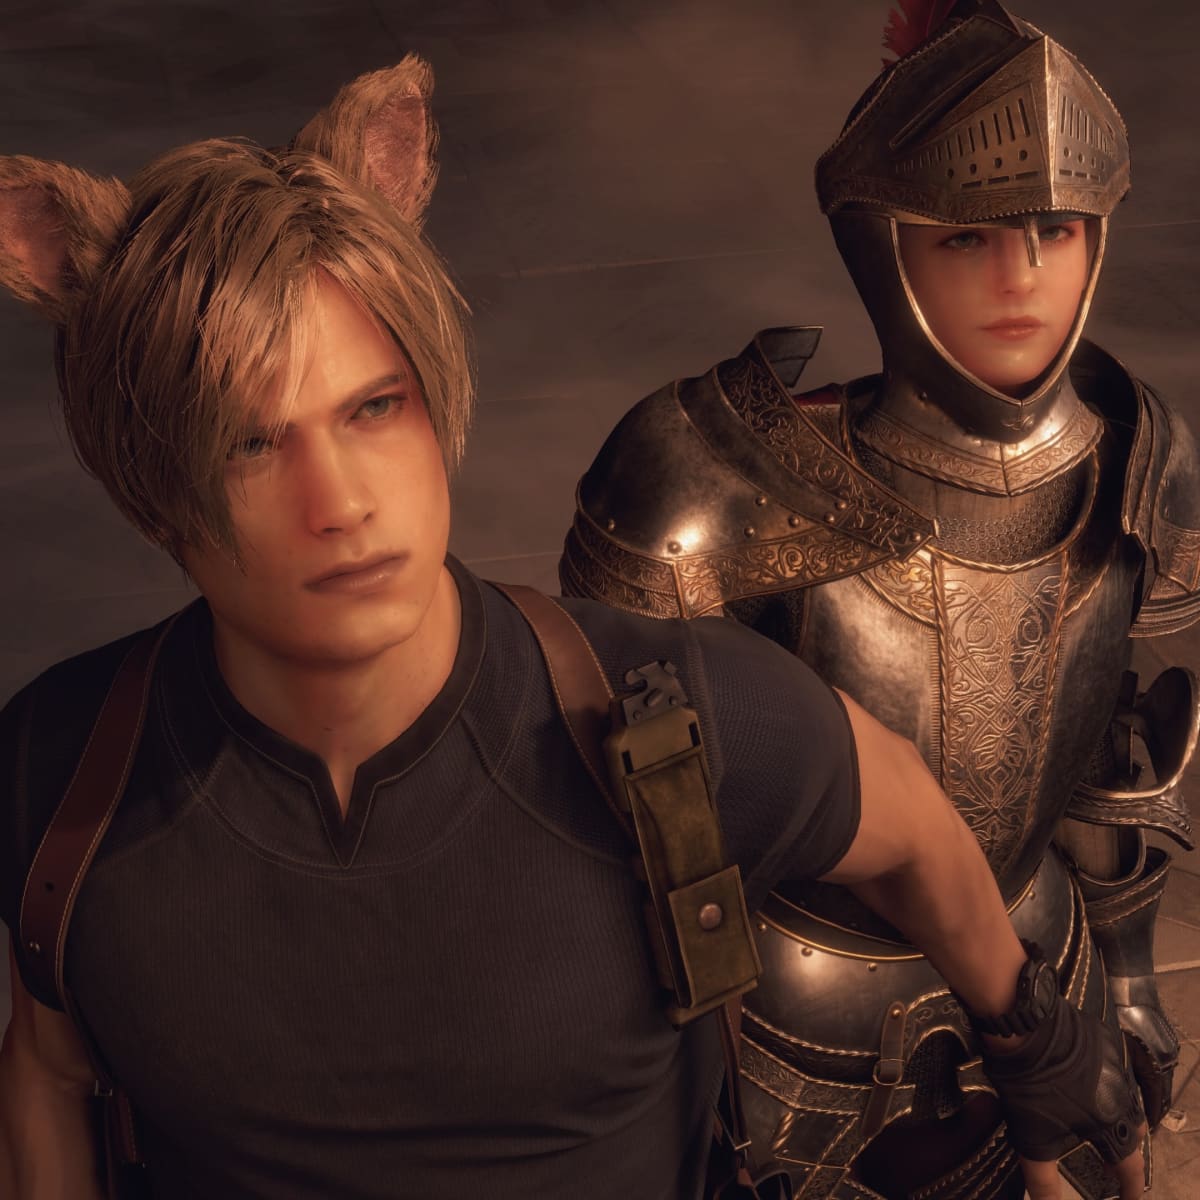 How to Speedrun the Resident Evil 4 Remake to Unlock Cat Ears